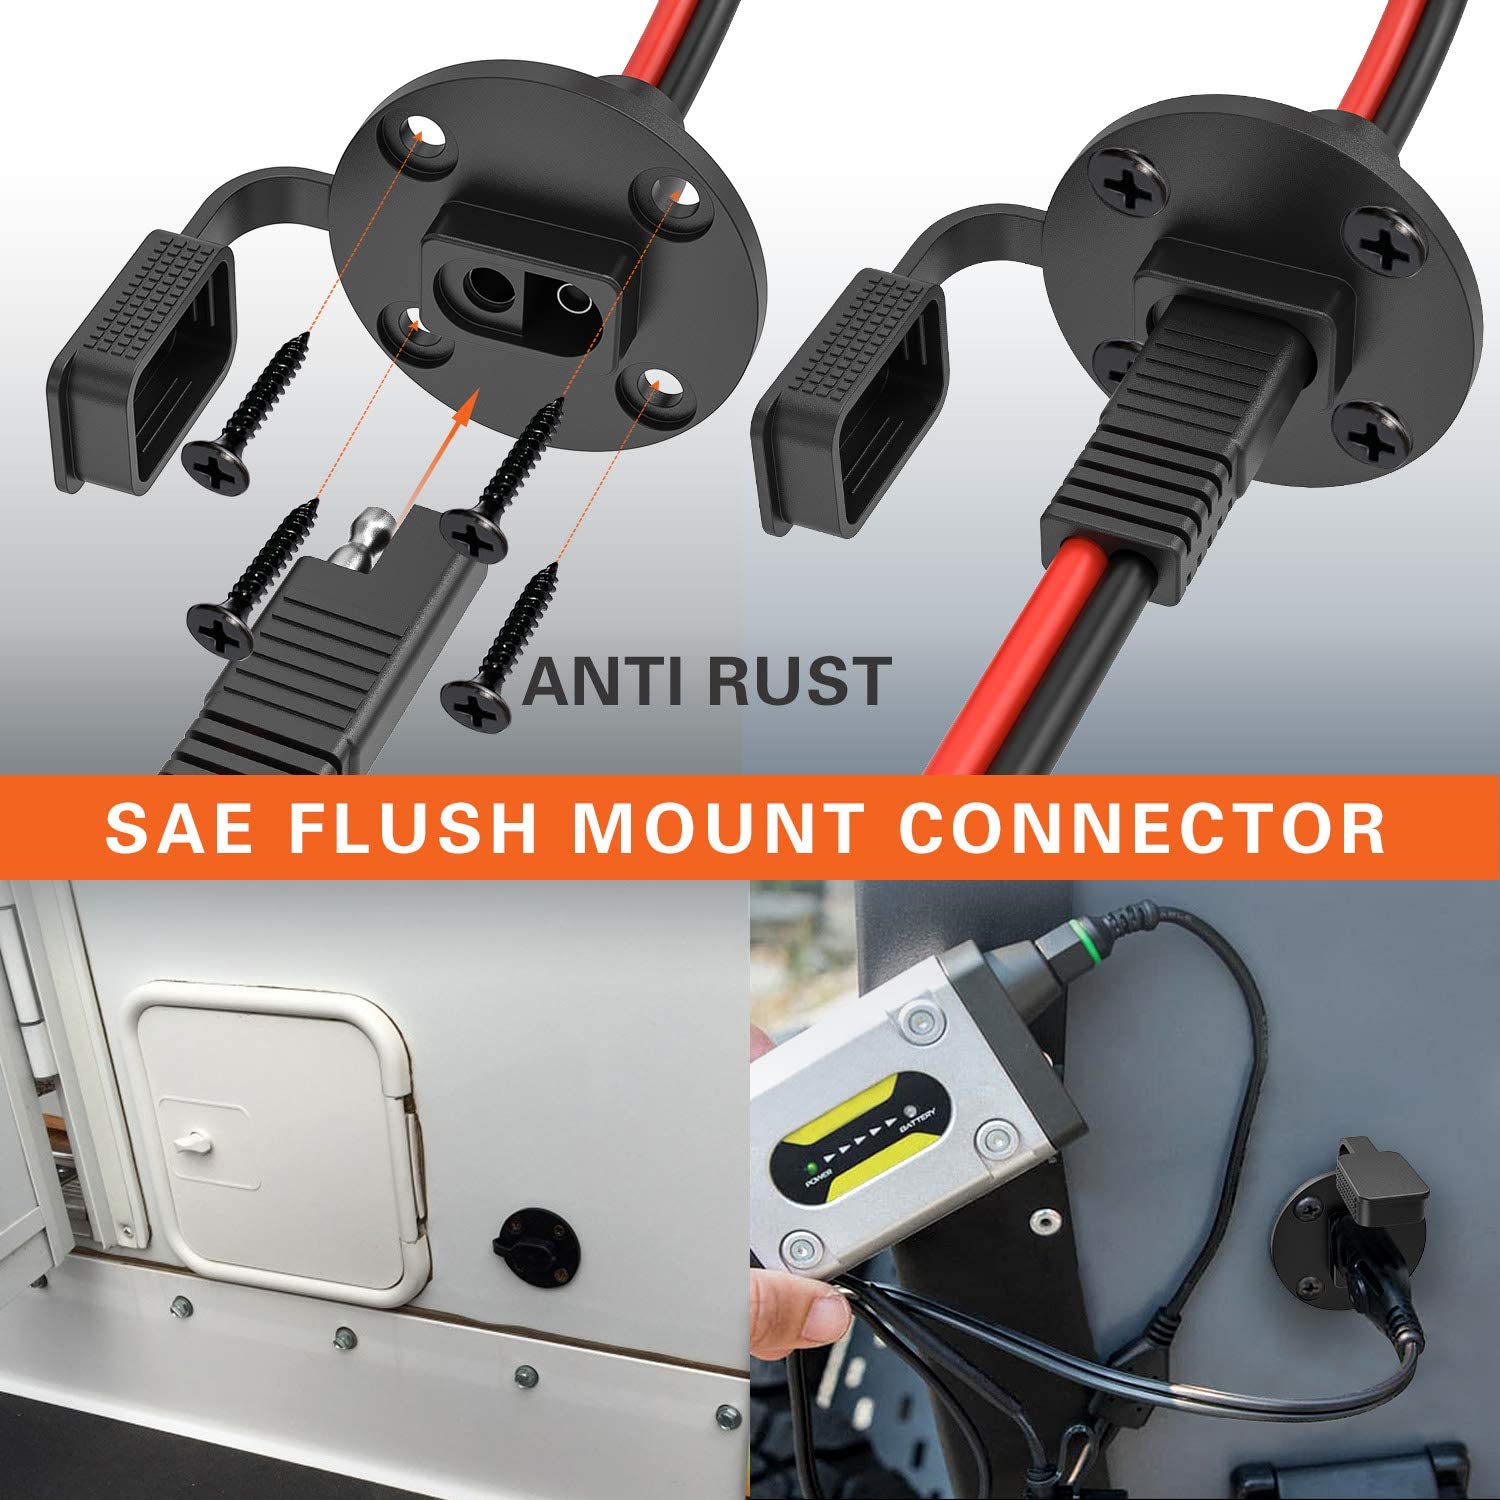 Flush Mount SAE Connector